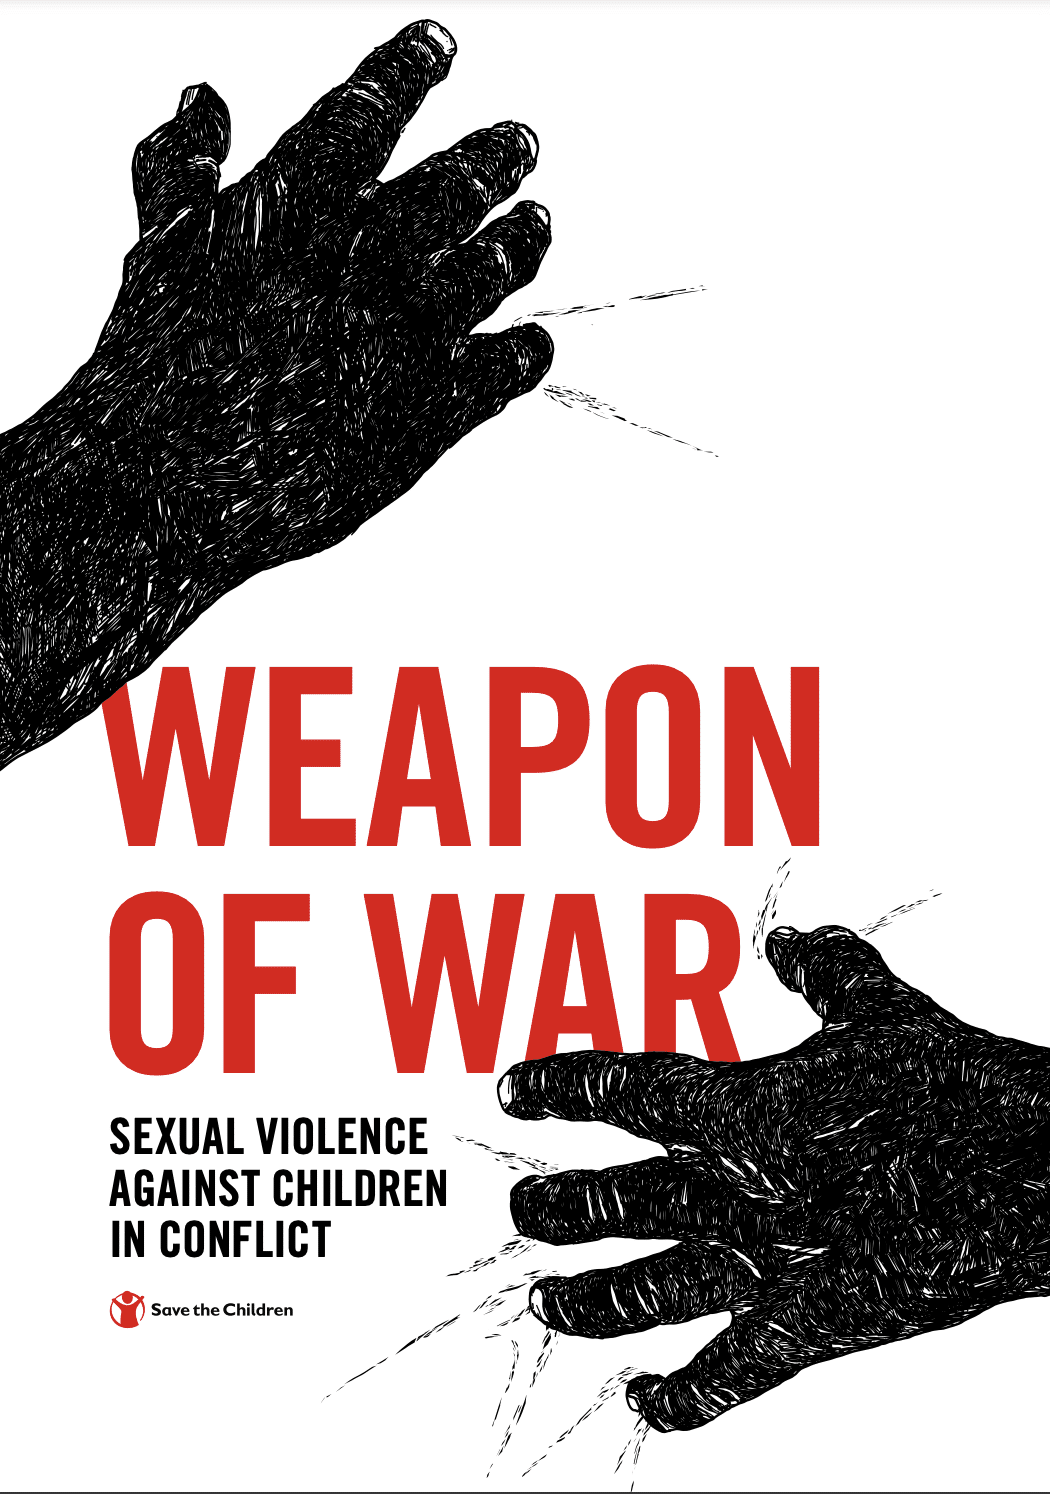 Weapon of war